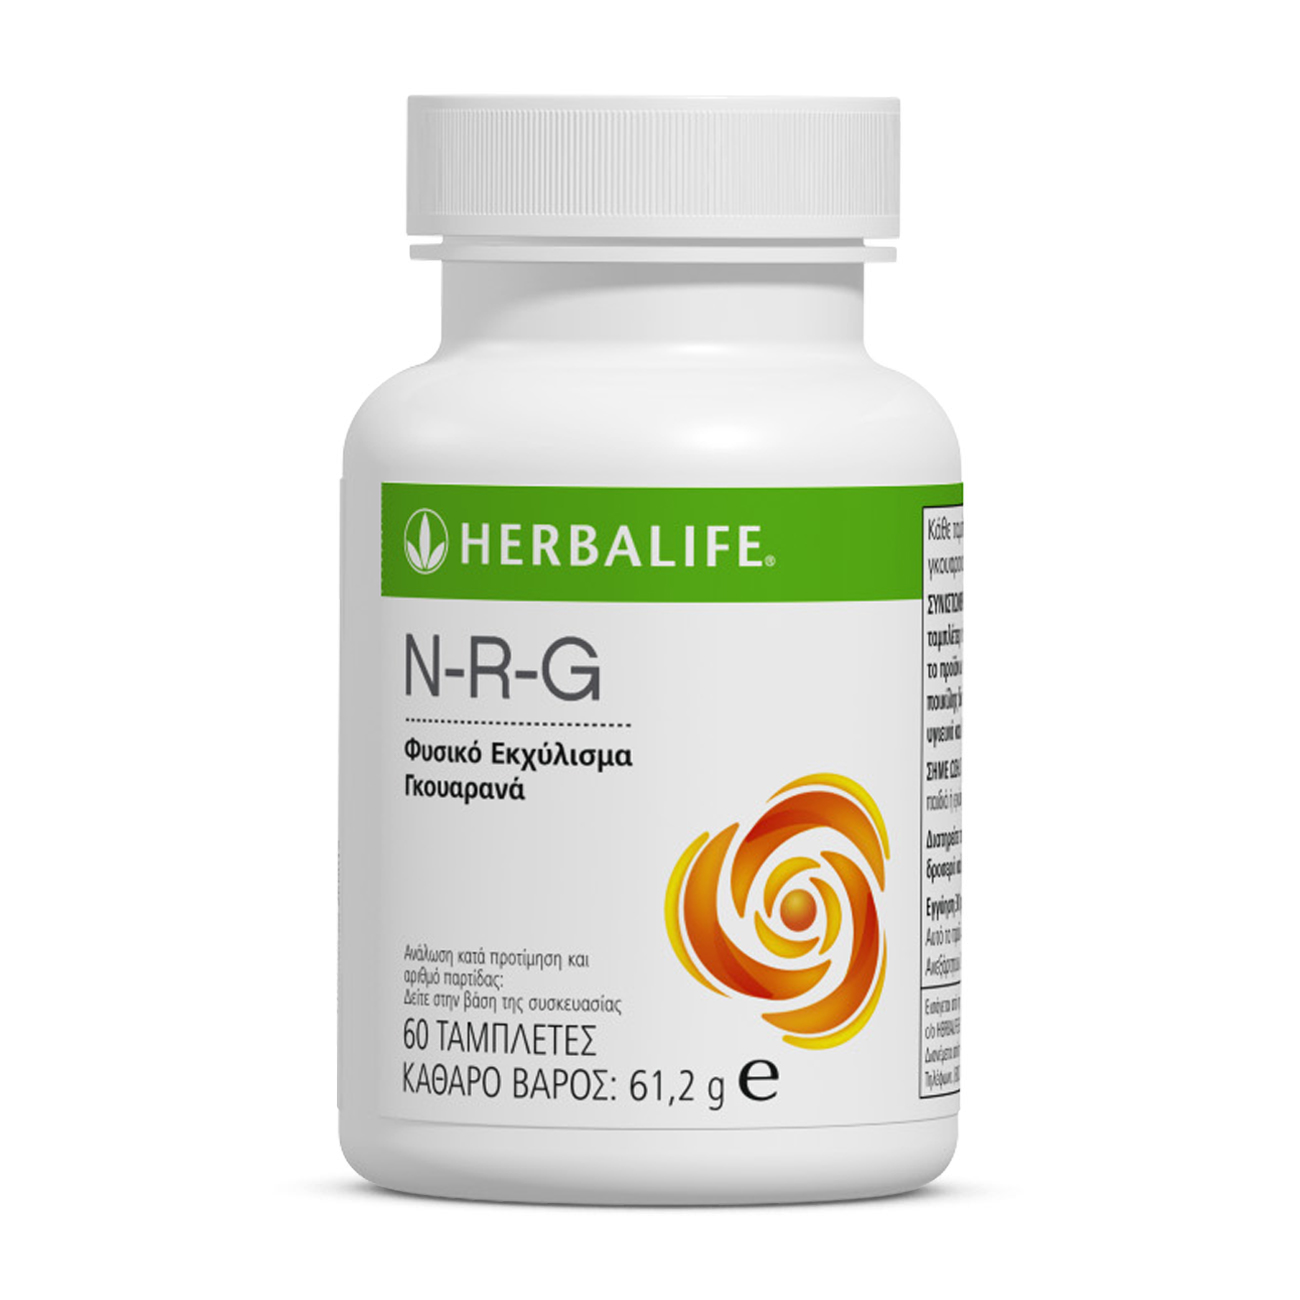 N-R-G Φυσικό Εκχύλισμα Γκουαράνα  Συμπλήρωμα Διατροφής  product shot.